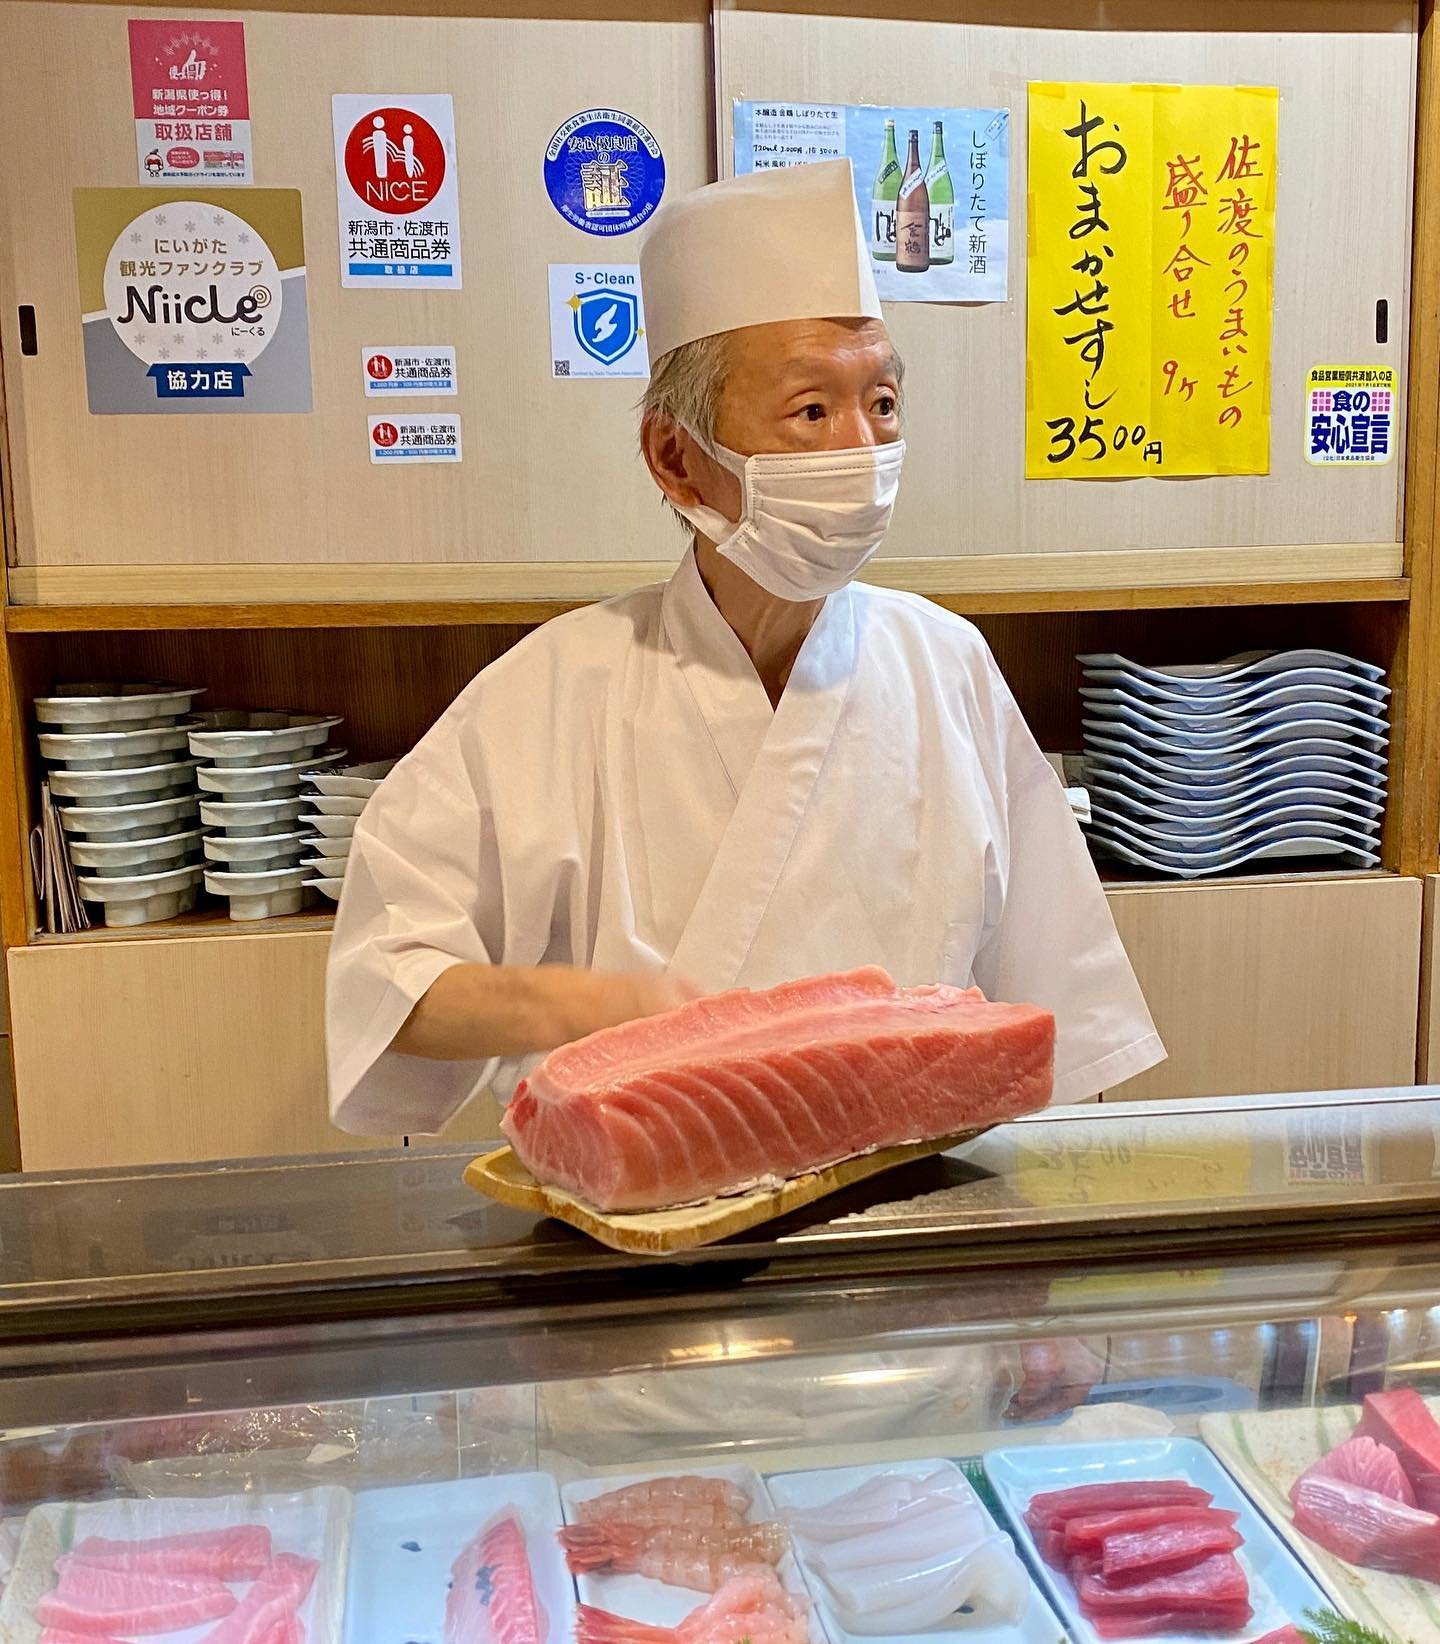 The sushi boss of Sado island &hellip; @sake_tours 

#japantravelguide #discovertokyo #japanawaits #tokyophotographer #japanrevealed #explorejpn #lovers_nippon #japantravel  #bestjapanpics #japan_of_insta #photo_jpn #cinematicmodeon #gotokyojp #japan